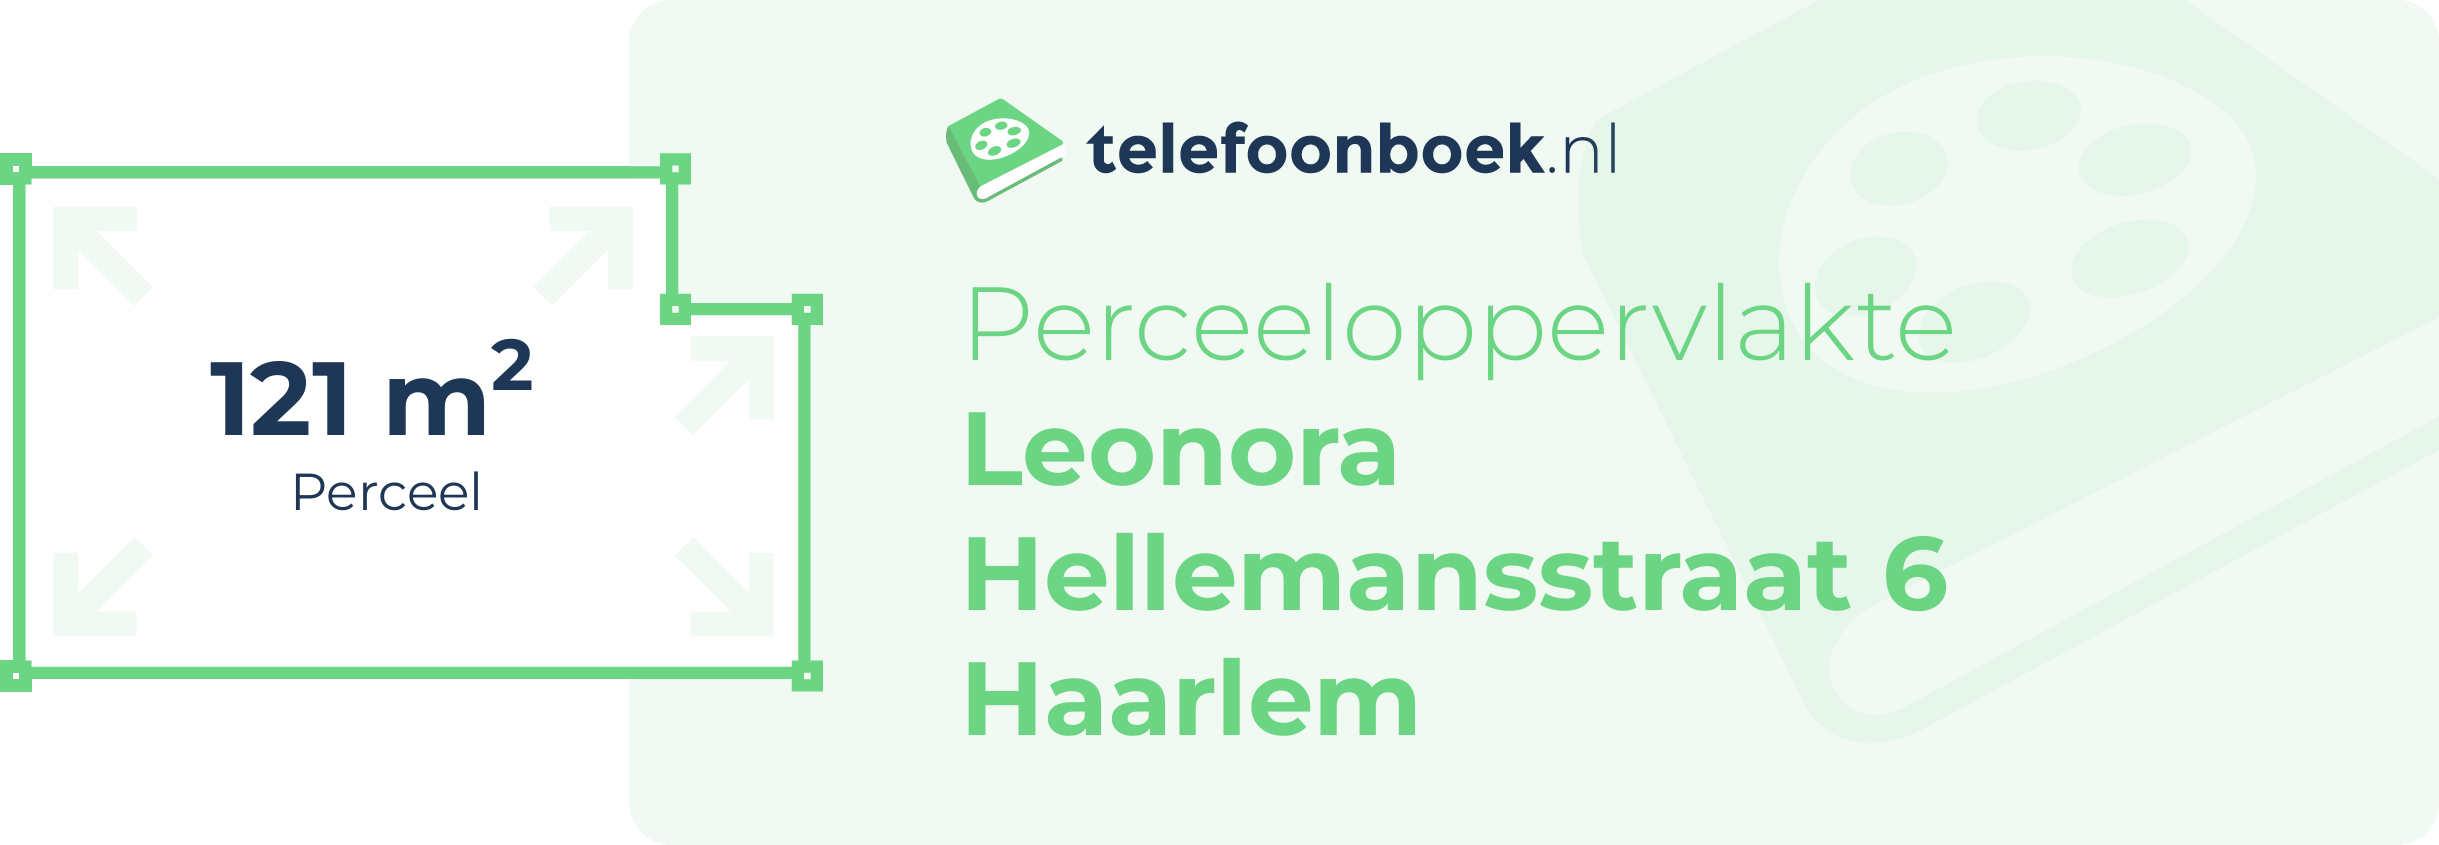 Perceeloppervlakte Leonora Hellemansstraat 6 Haarlem